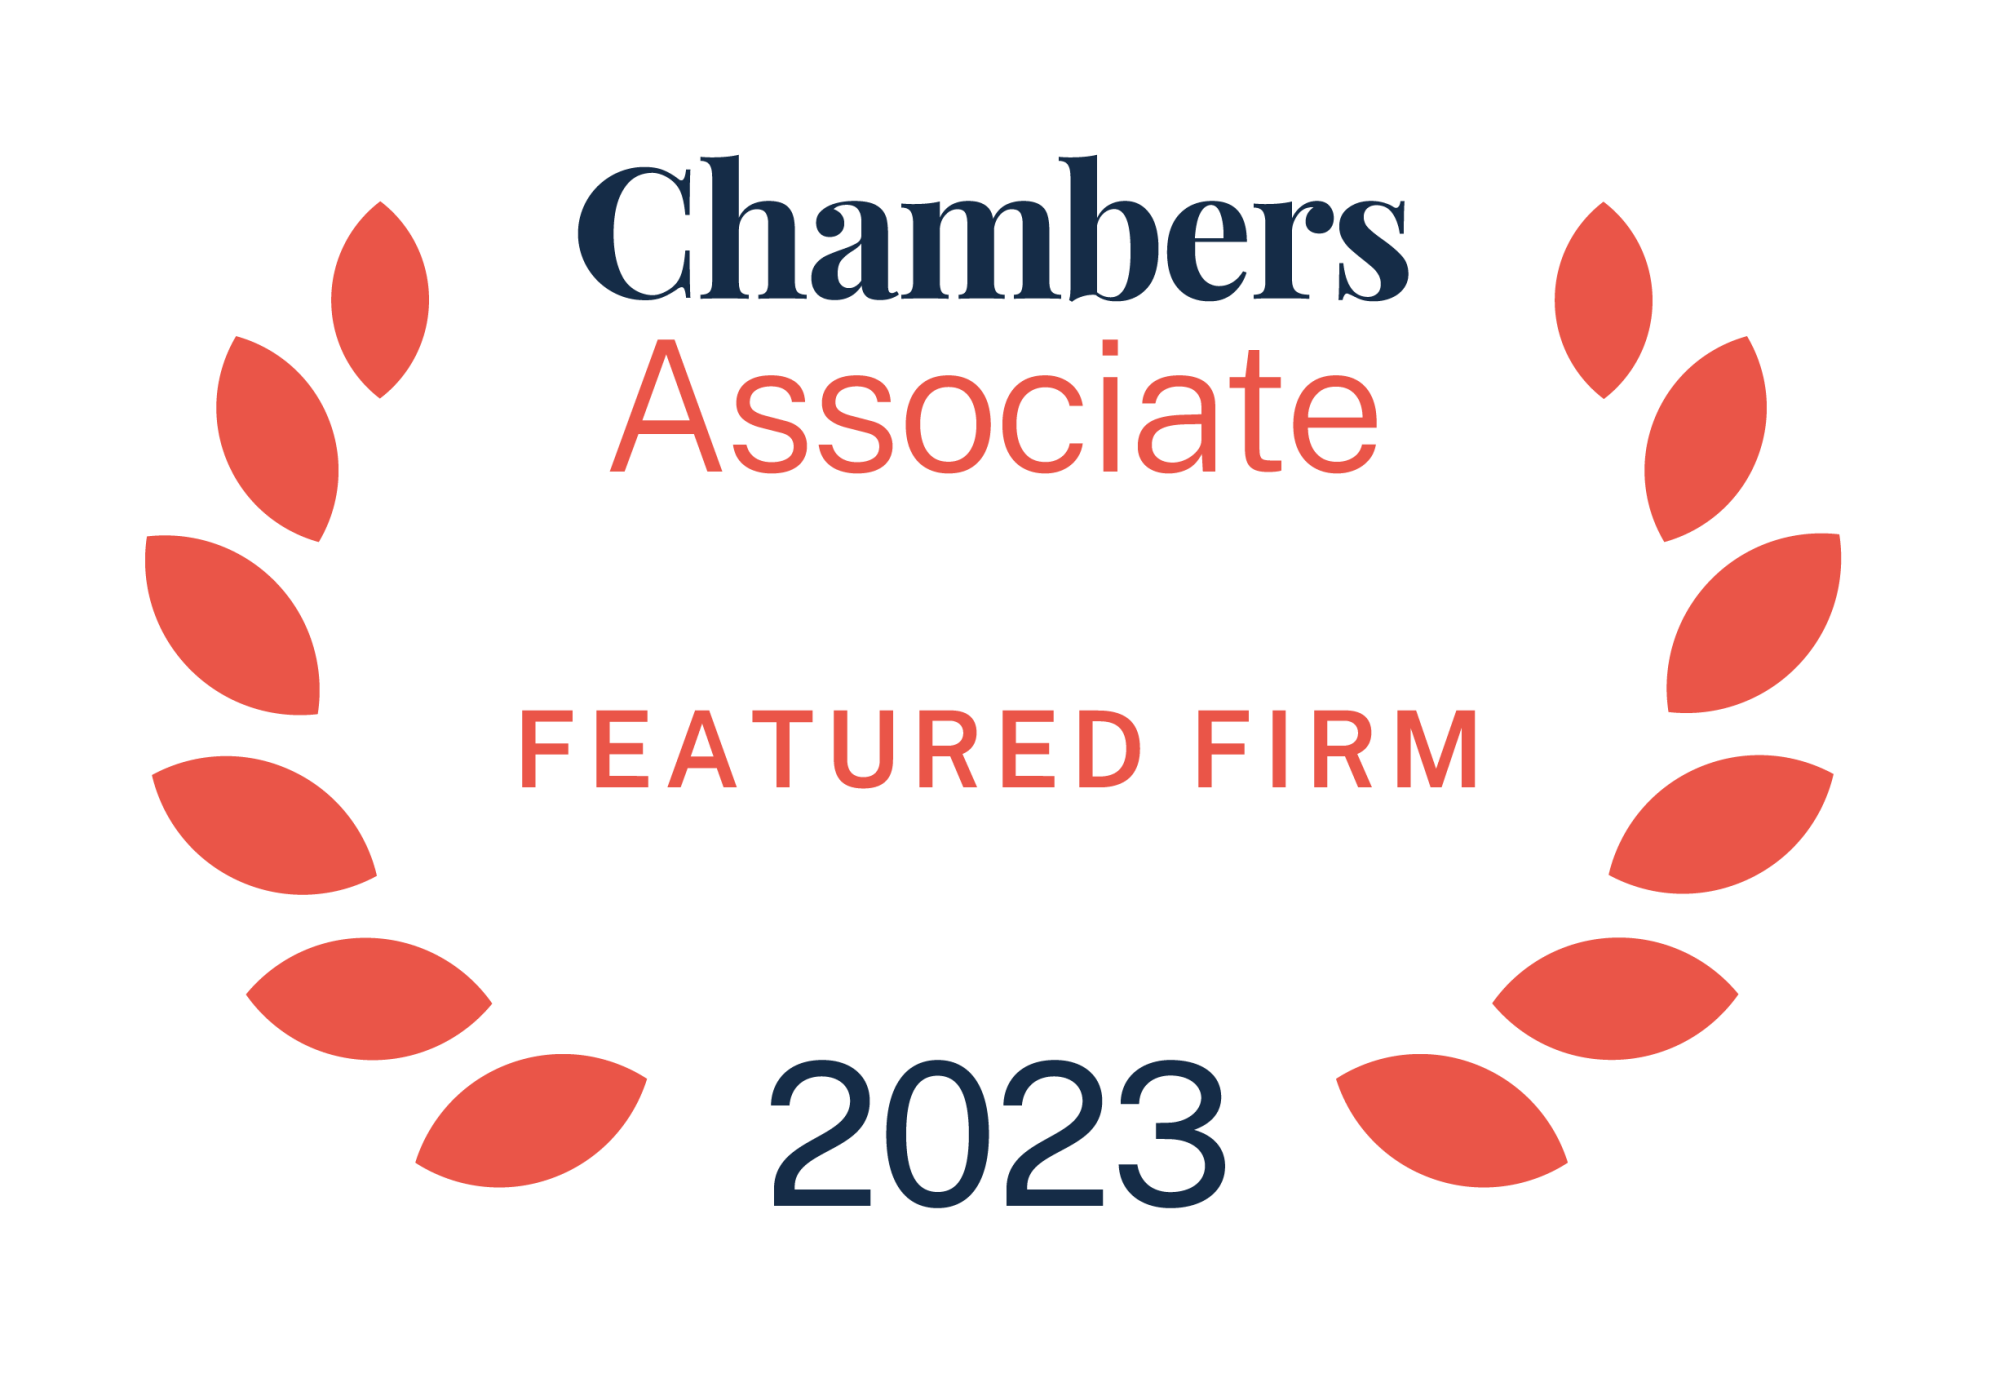 Chambers Associate Featured Firm